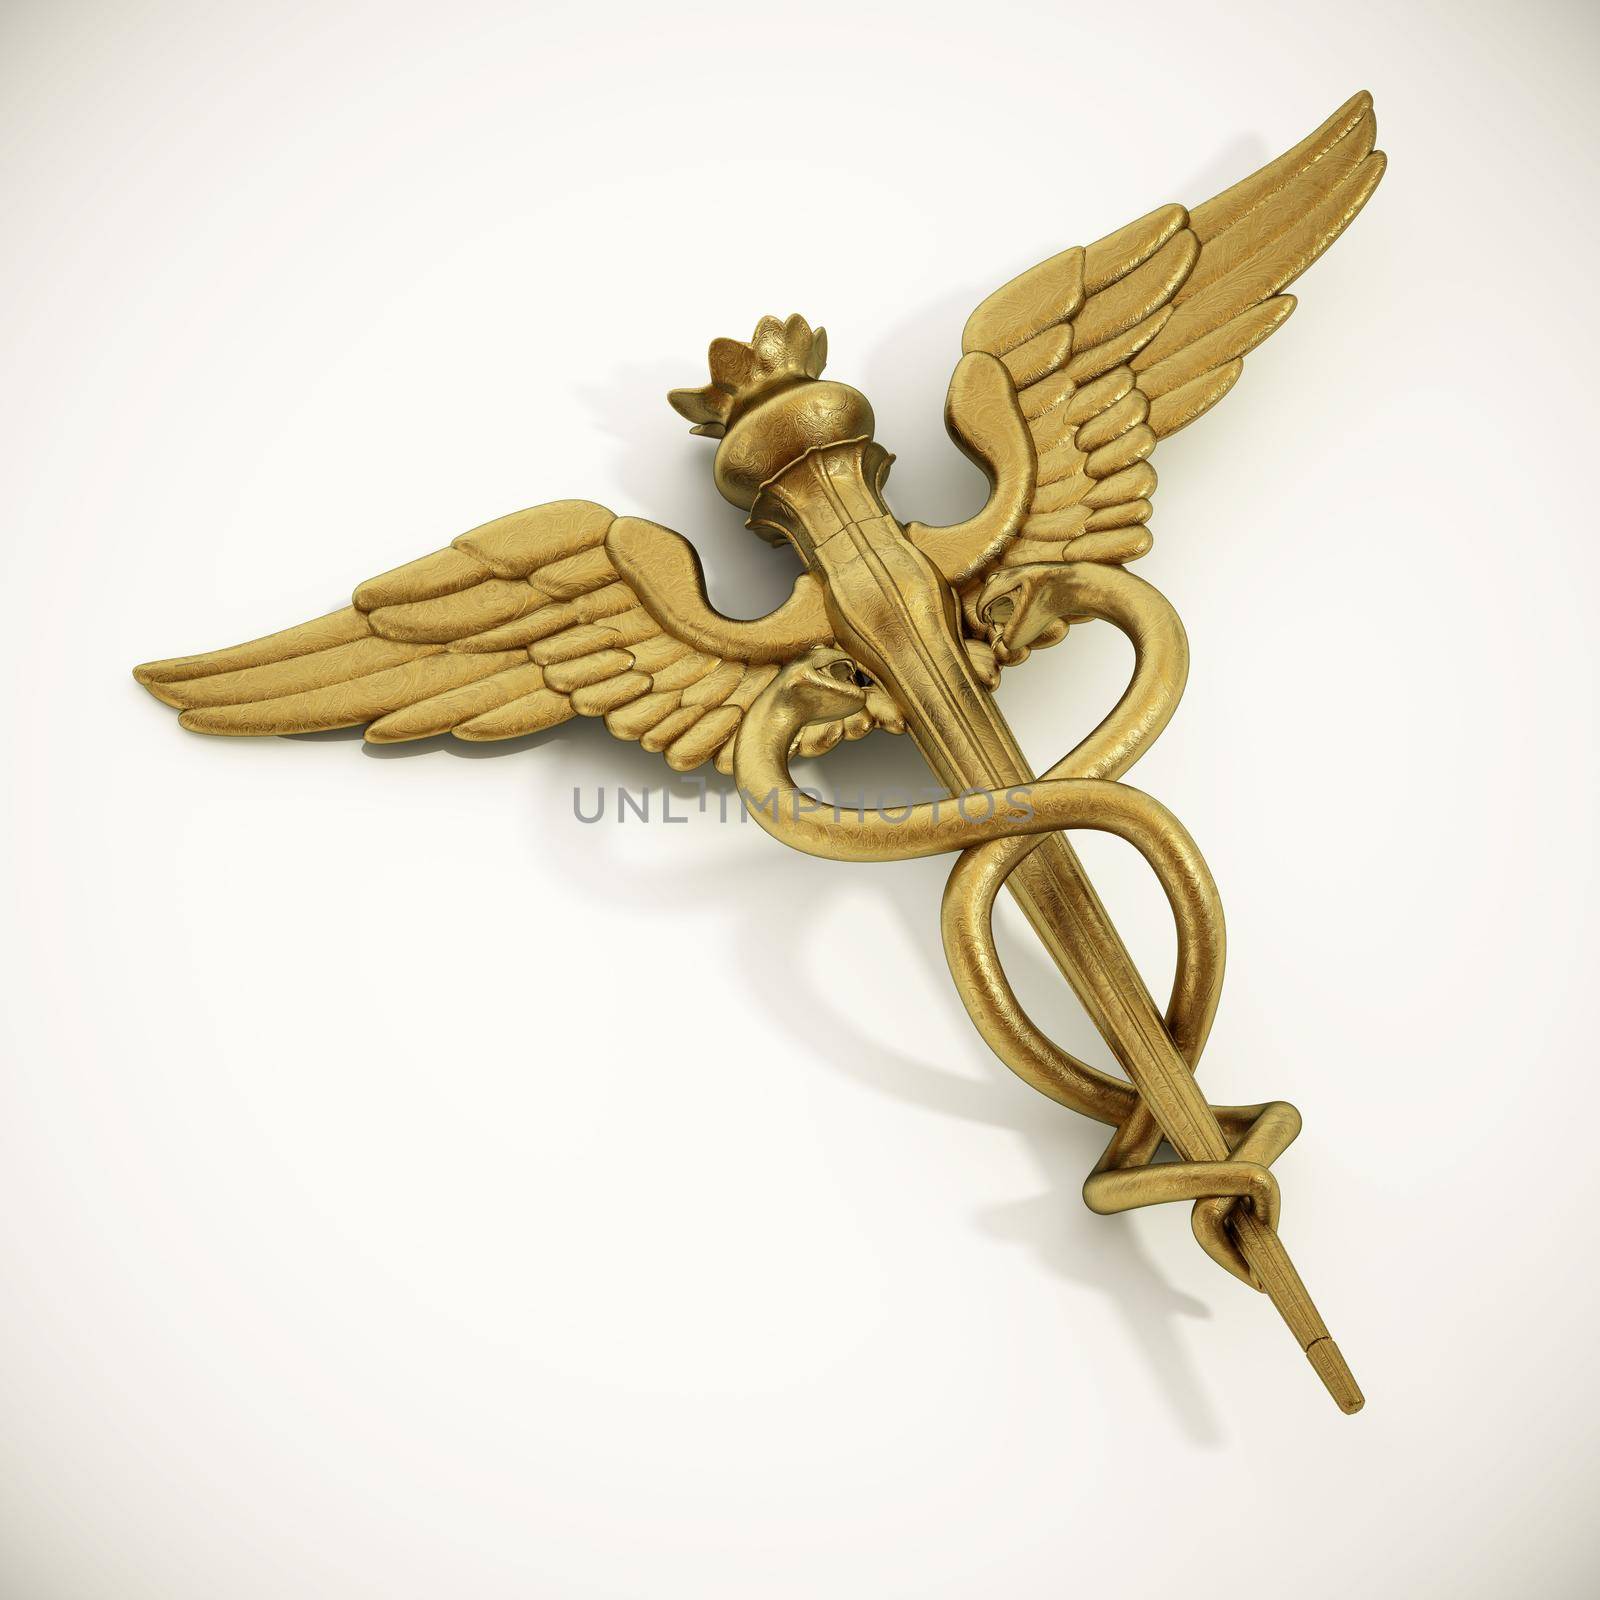 Gold caduceus symbol isolated on white background. 3D illustration.